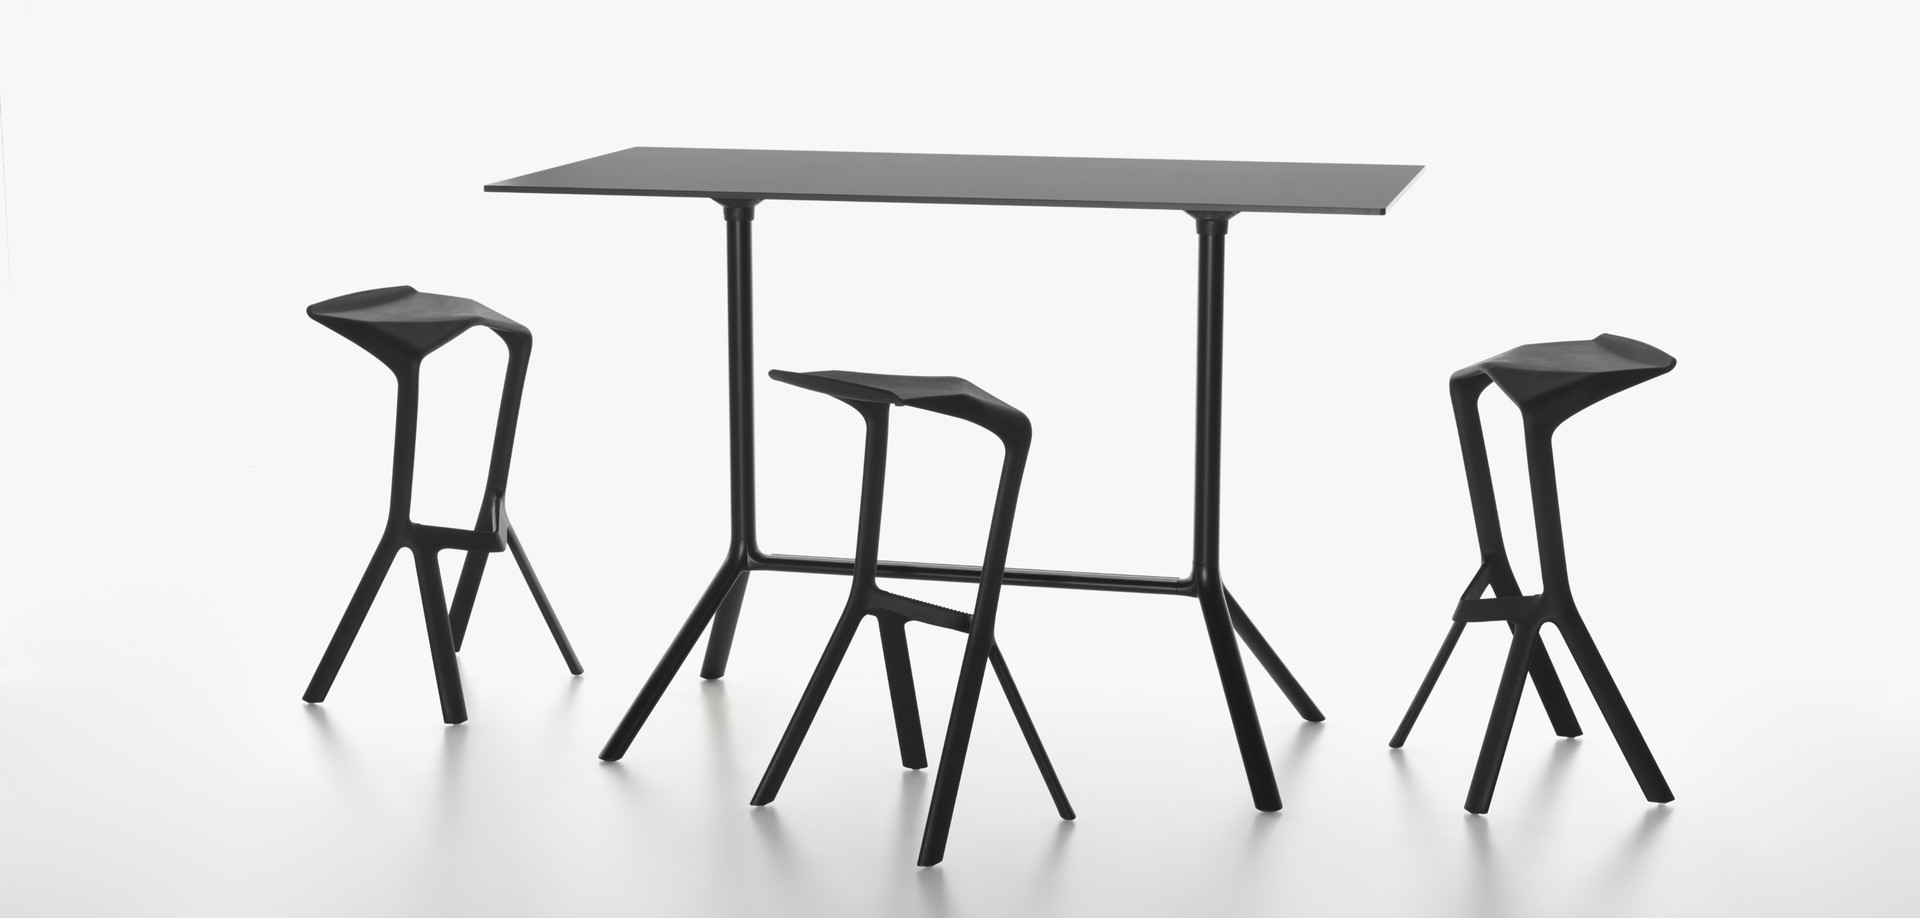 Plank - MIURA table rectangular table top, 103 cm high, black. Miura stool.